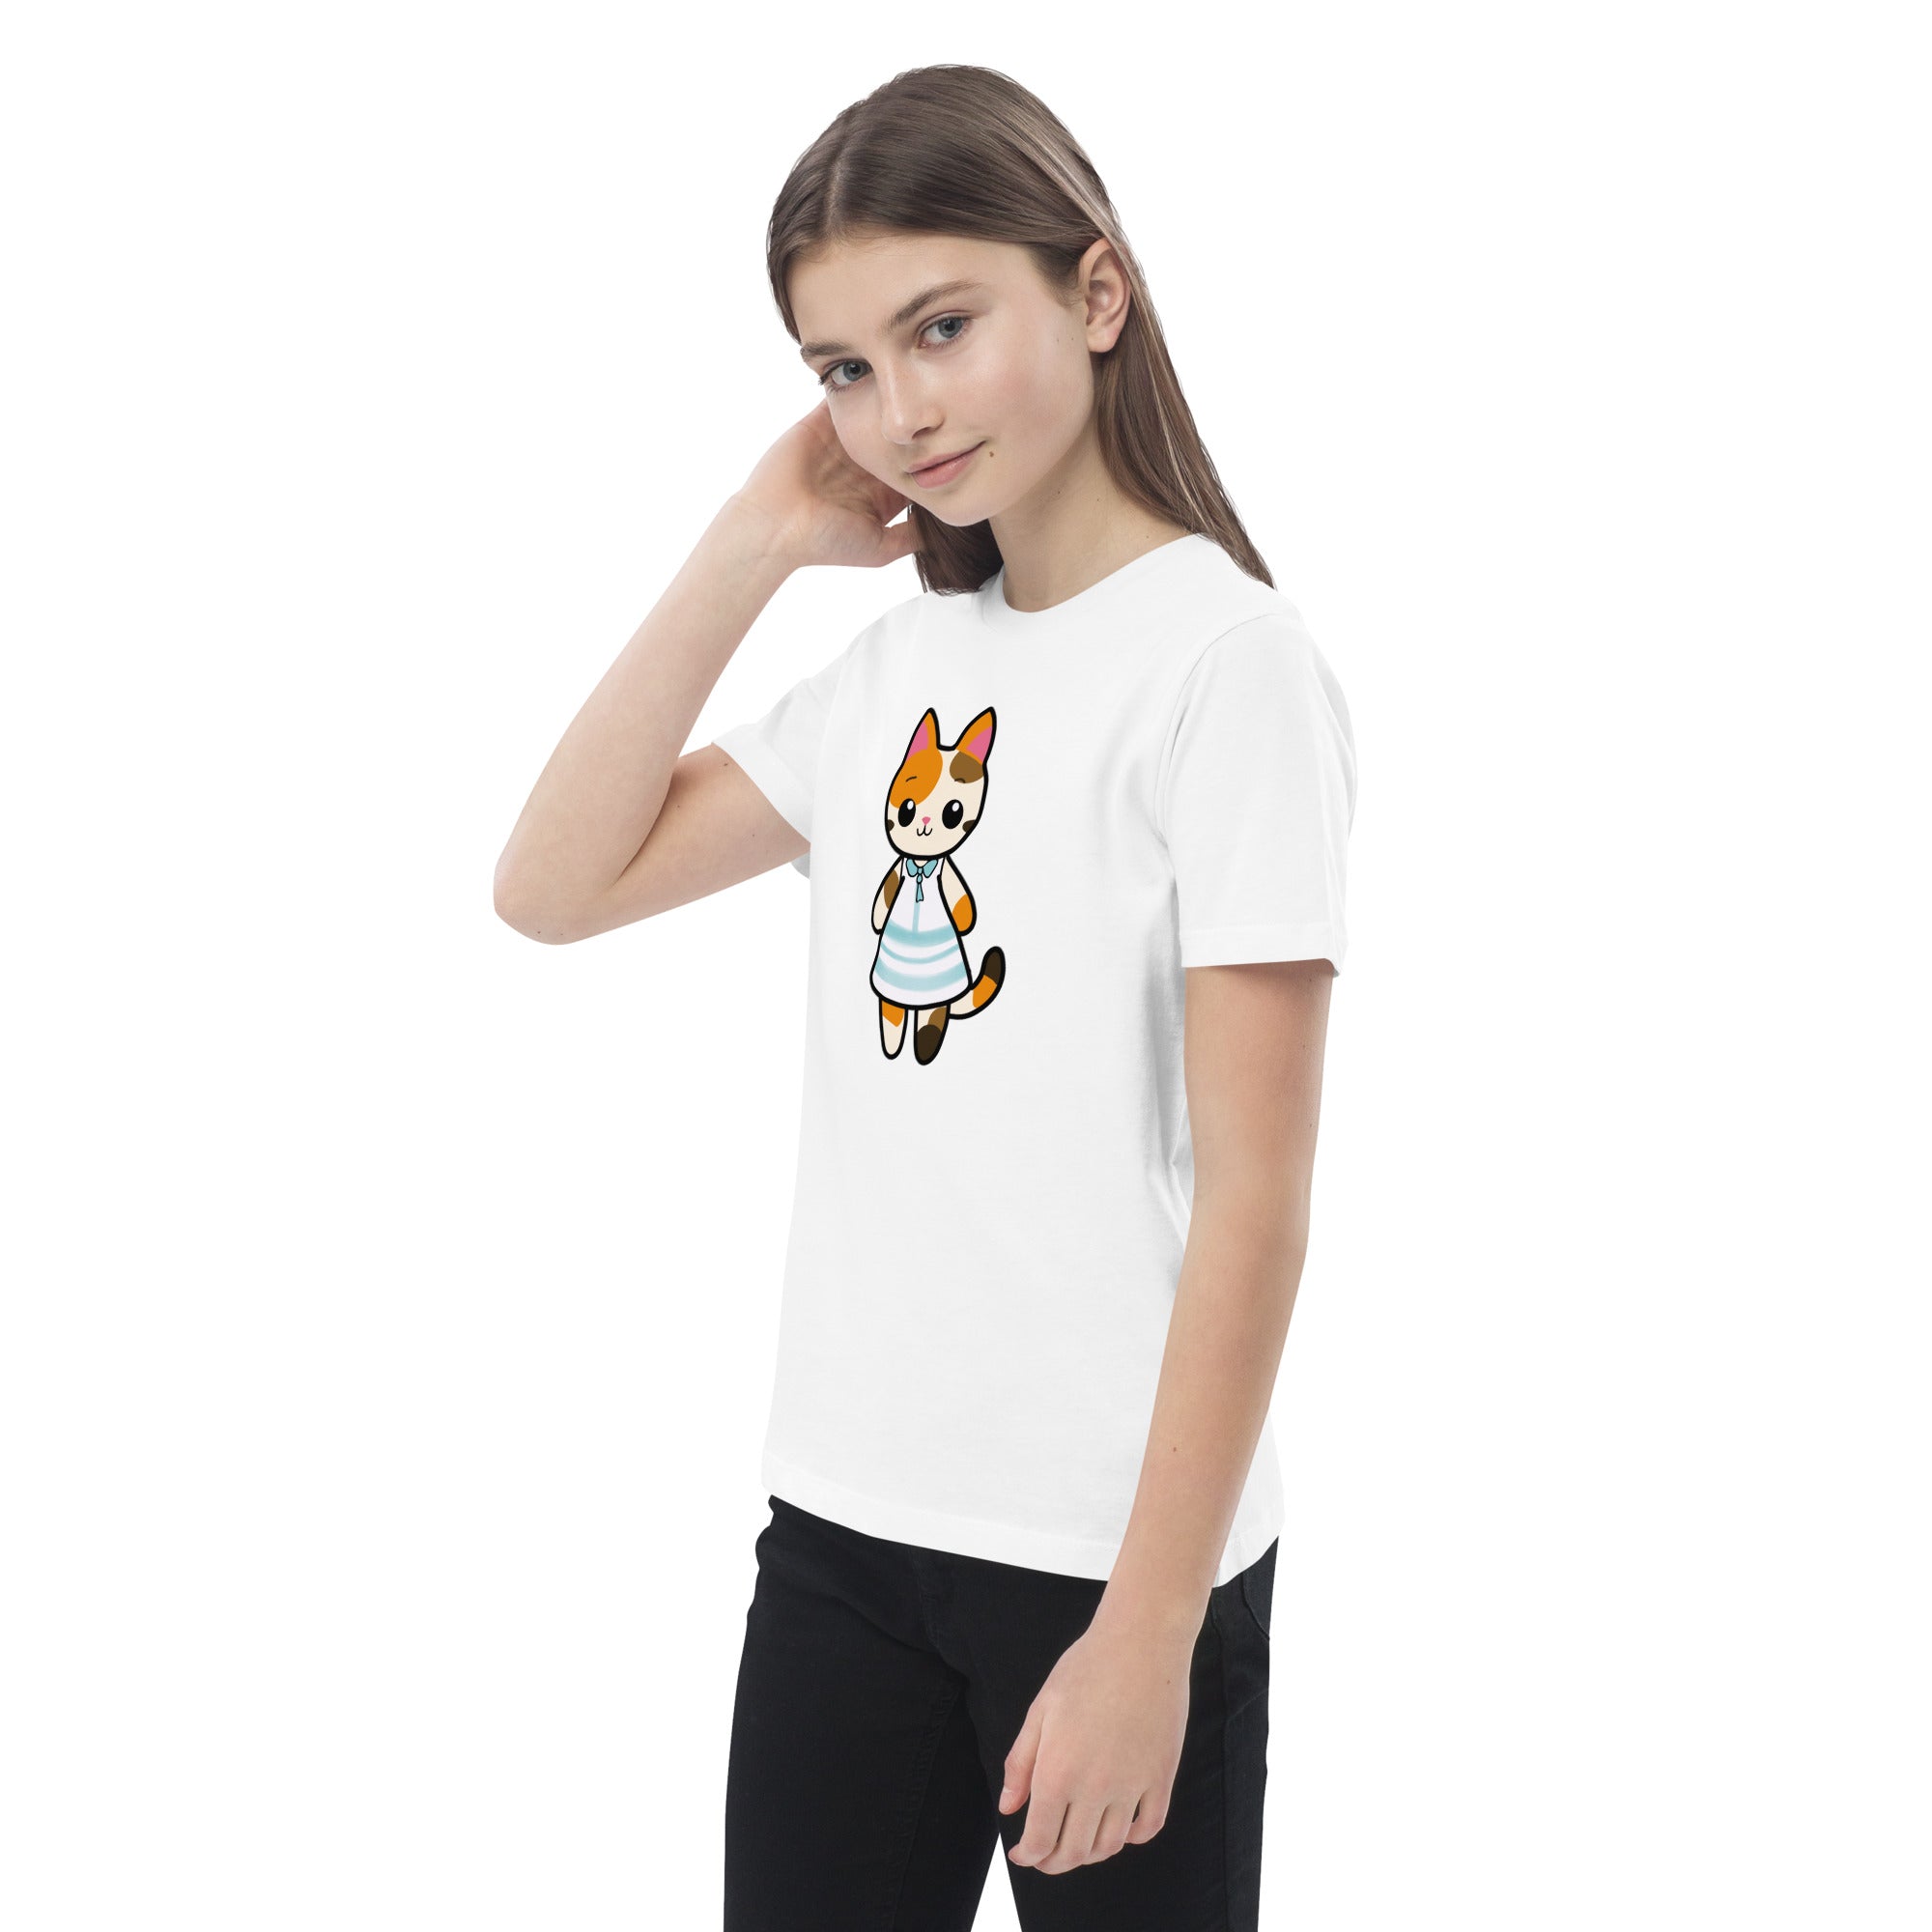 Calico Cat in a Sun Dress Organic Cotton Kids' T-shirt